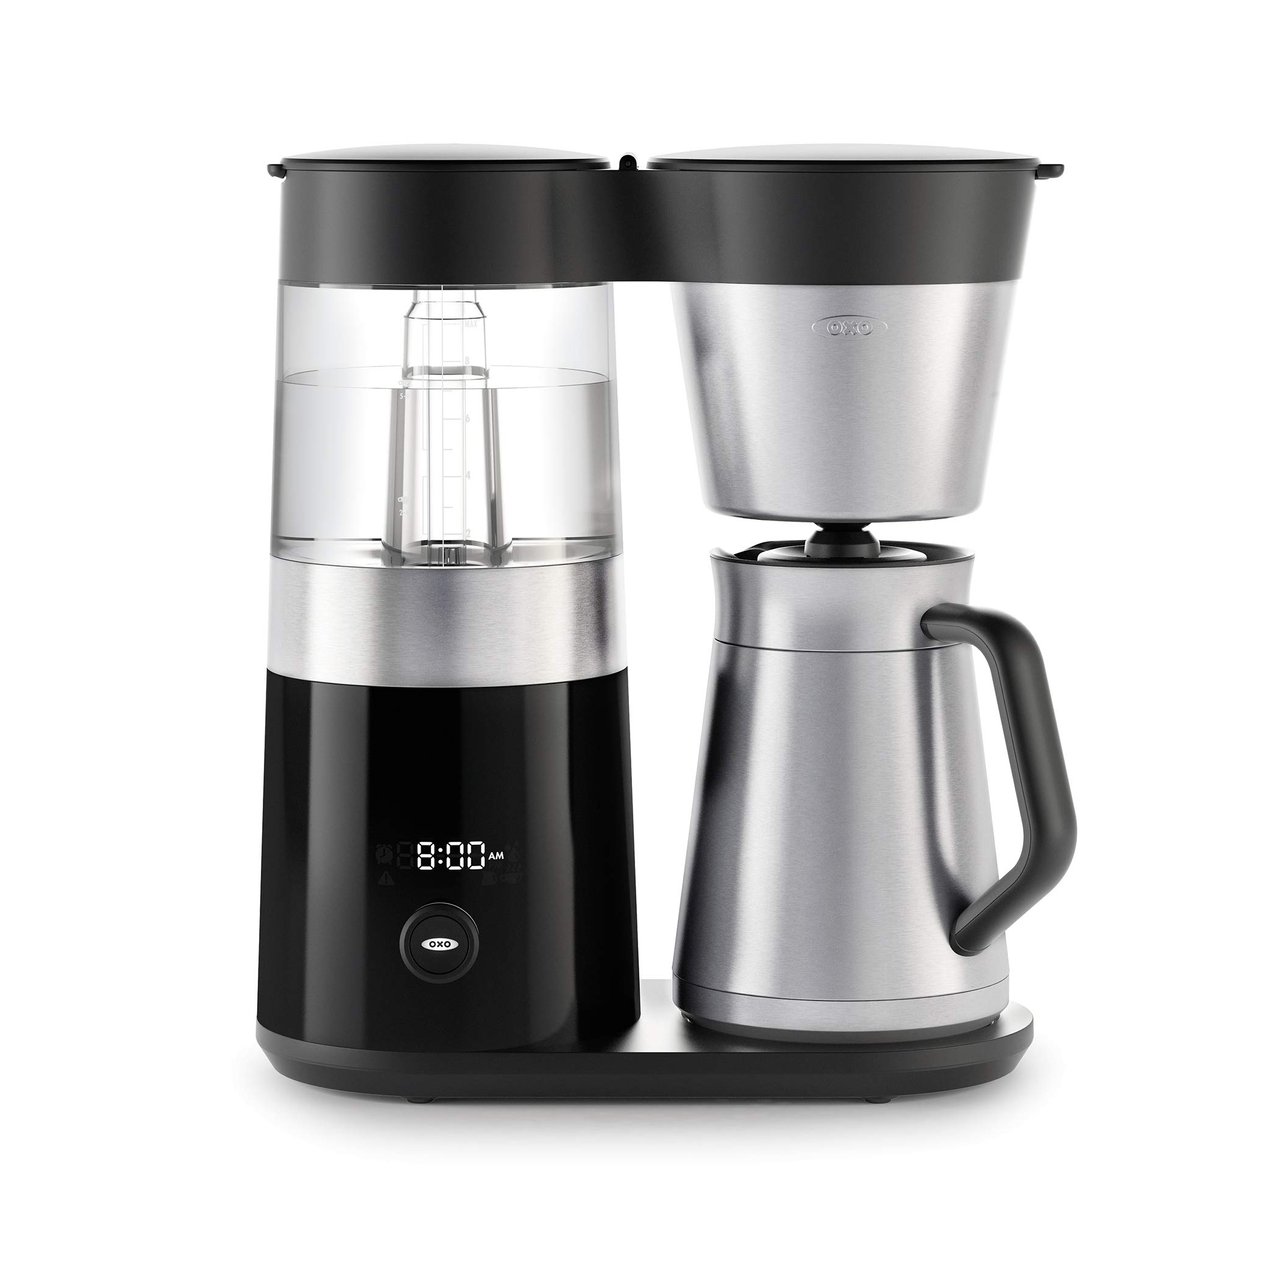 7 OXO | MorningBrew 9-Cup Coffee Maker